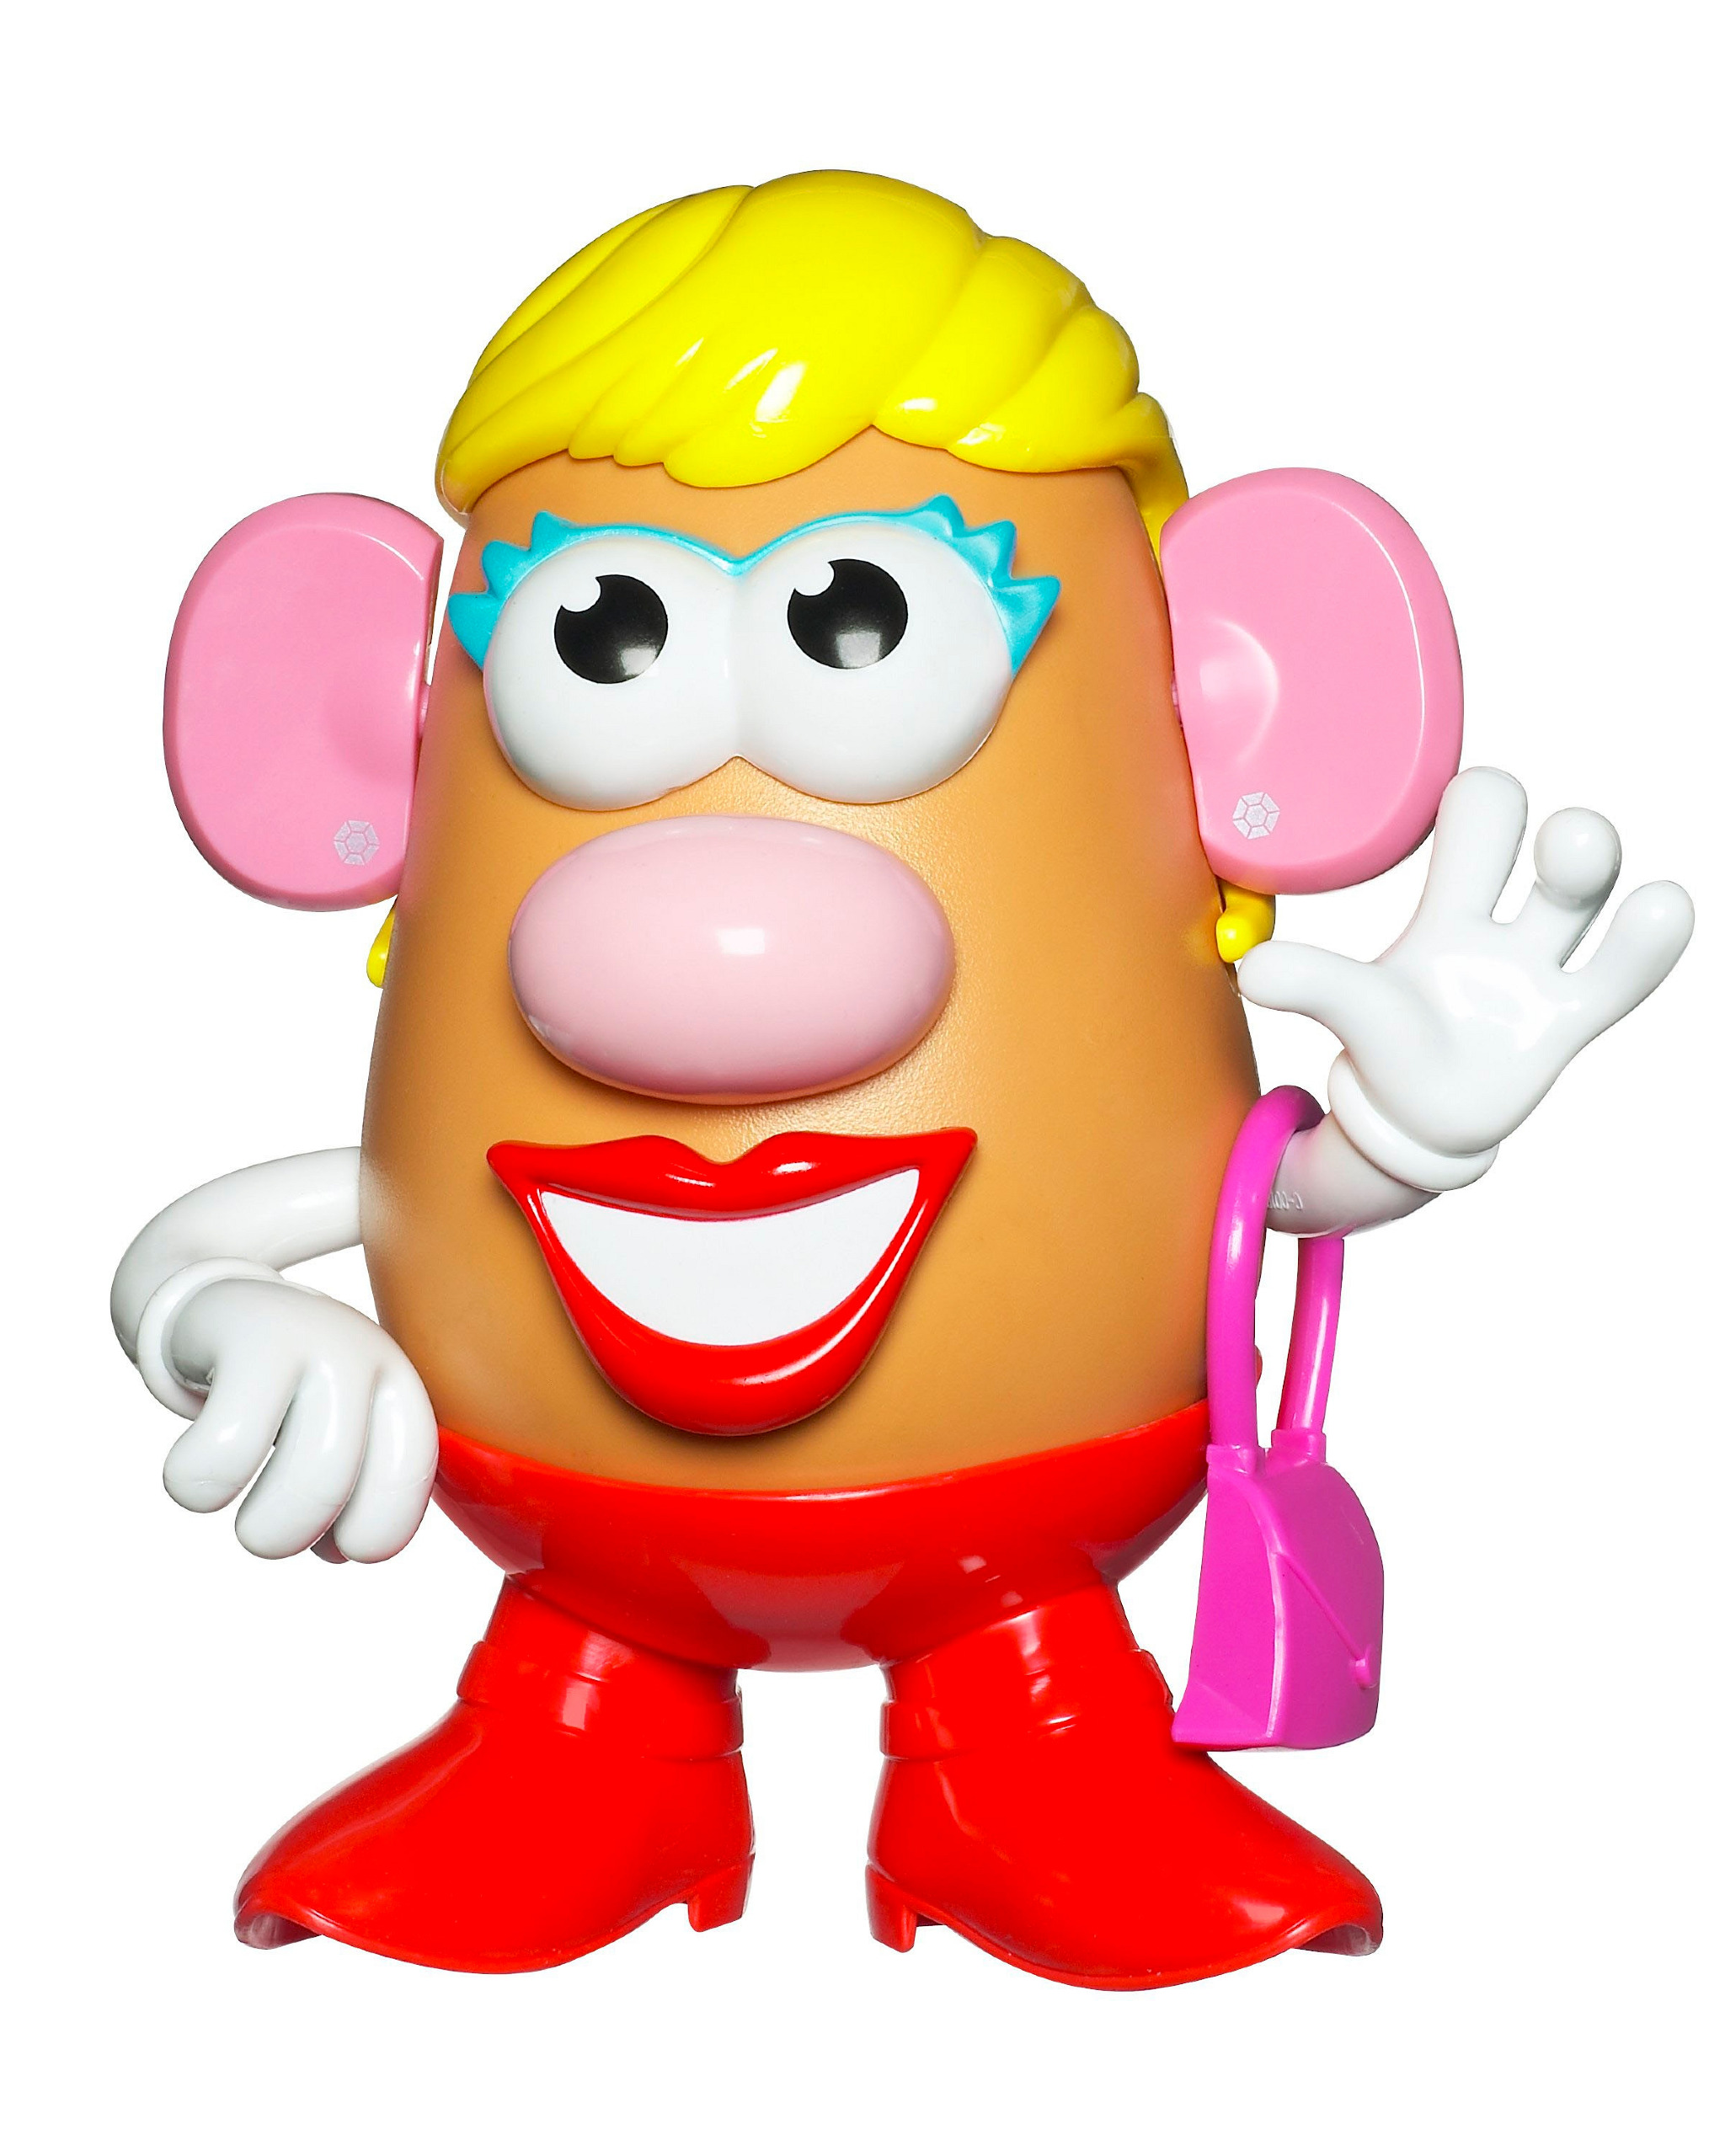 Mr potato. Hasbro Mrs Potato head миссис. Миссис картофелина Хасбро. Миссис картофельная голова история игрушек. Картофельная голова Хасбро.